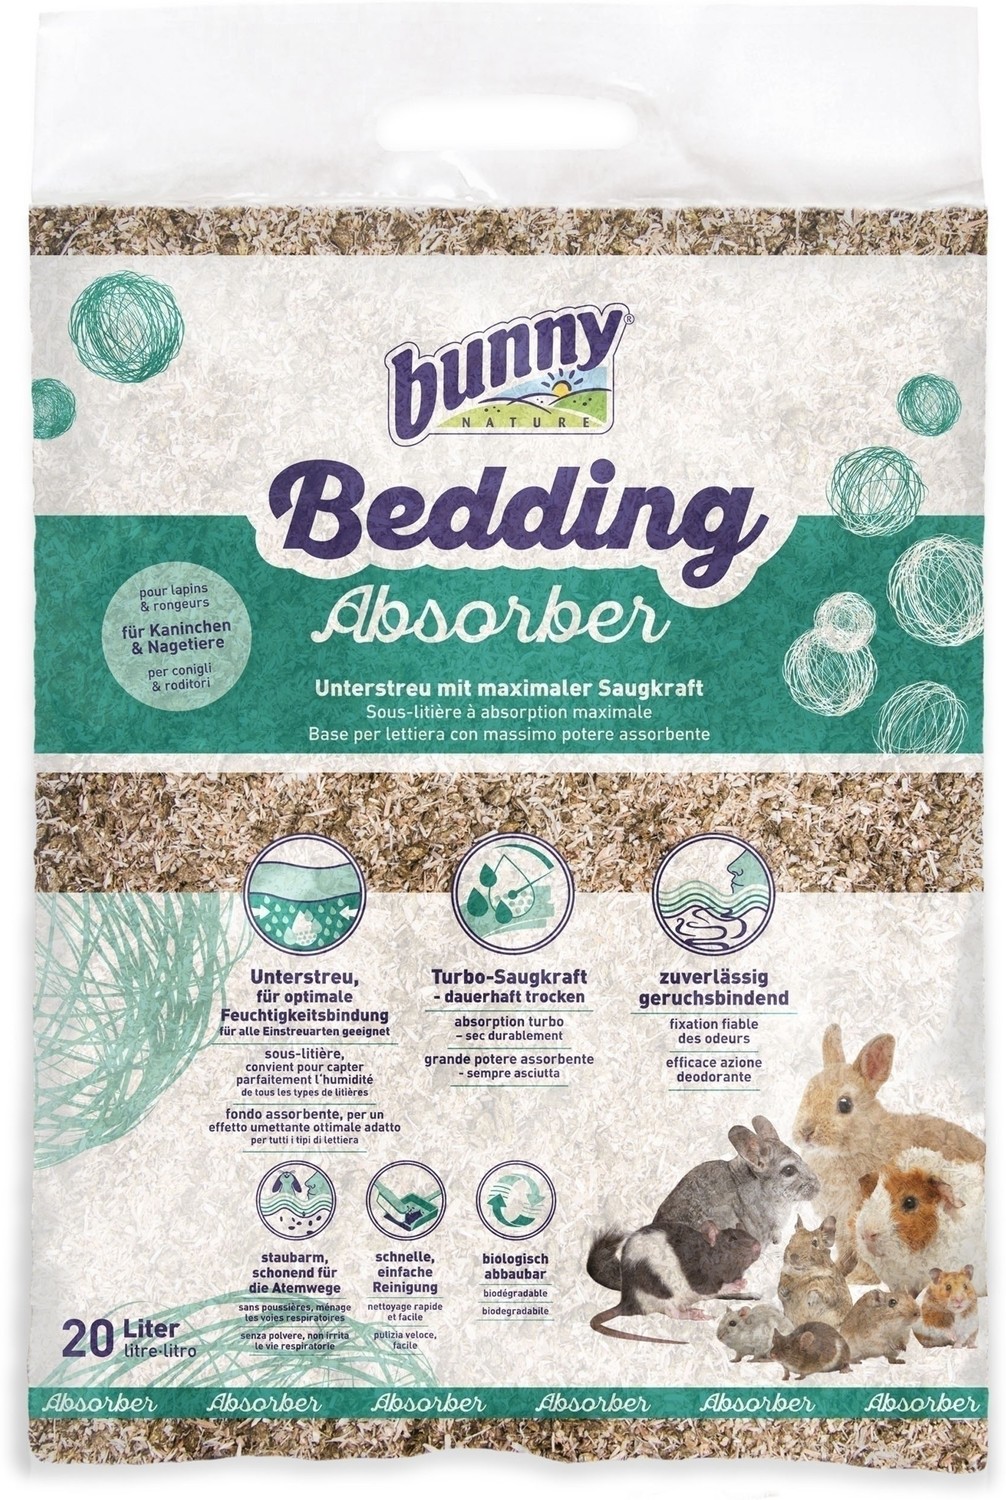 bunnyNature Bedding Absorber